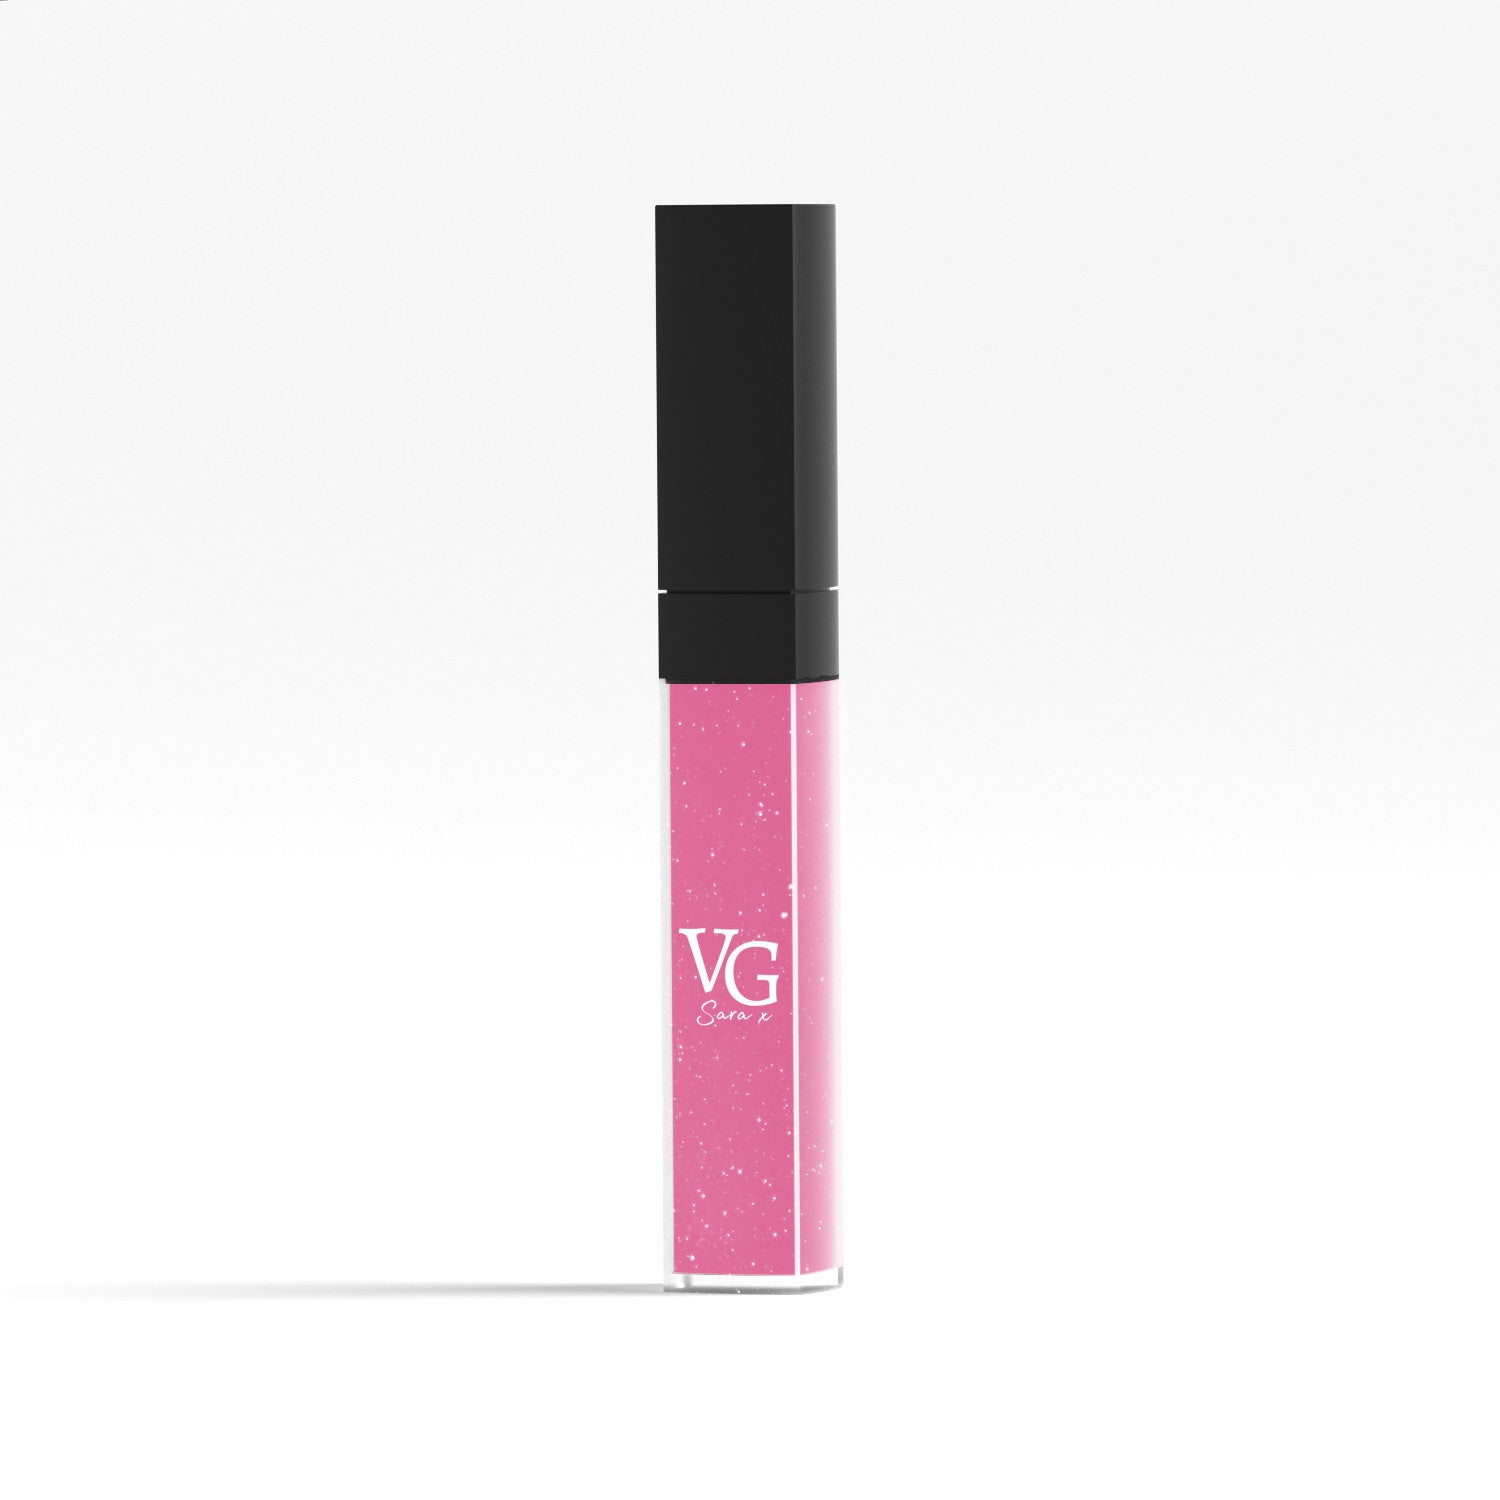 Rose-tinted VG vegan lip gloss